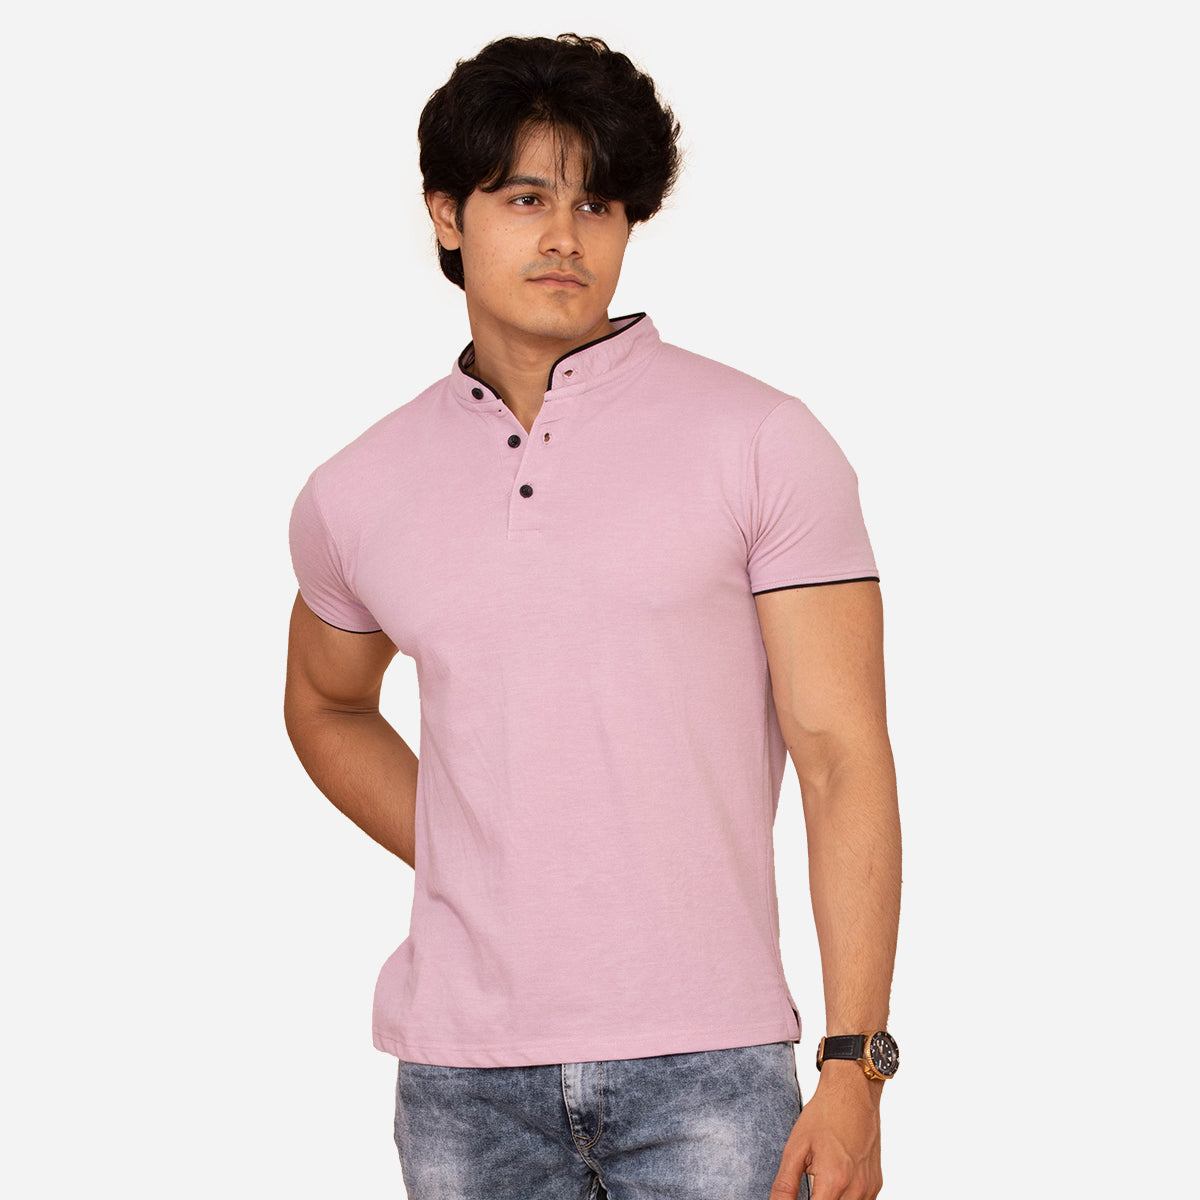 Prizmwear Pāla™️ Lilac Tshirt